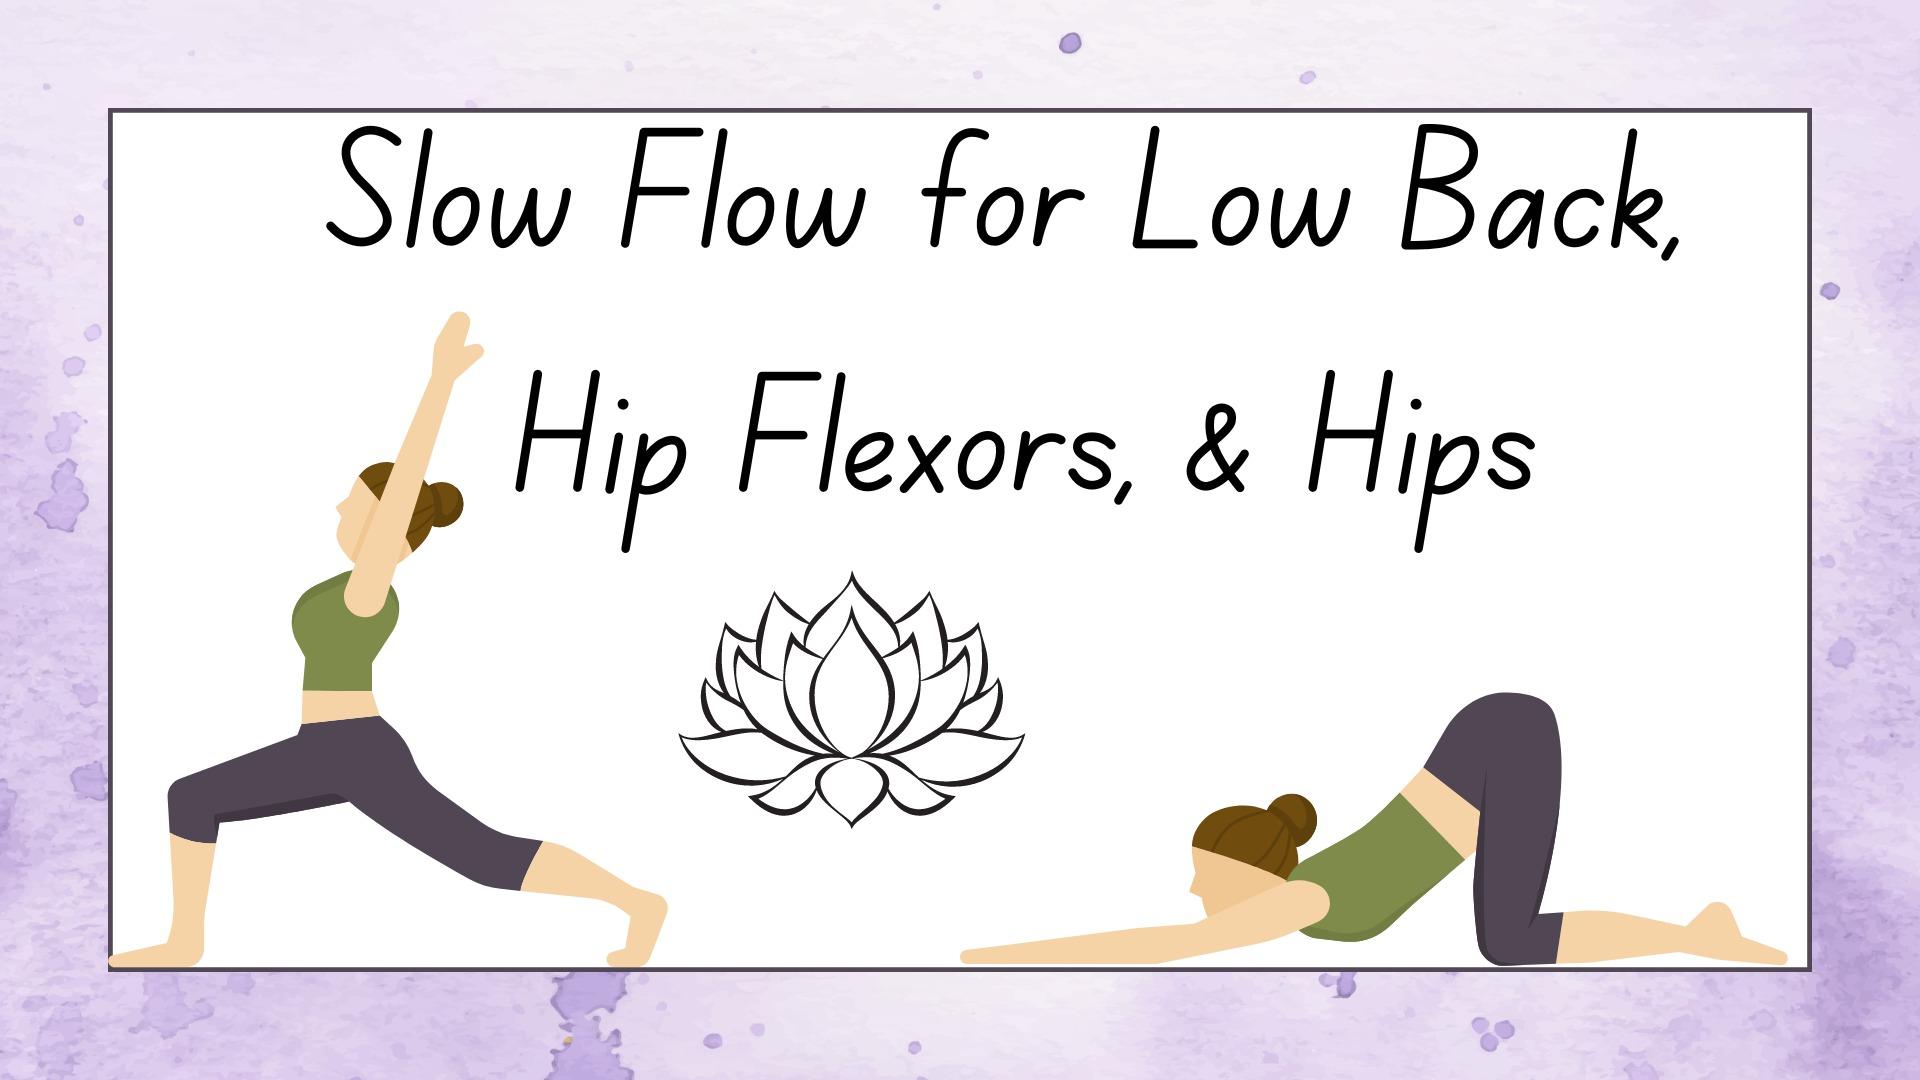 Slow Flow for Legs, Low Back, Legs, & Hip Flexors